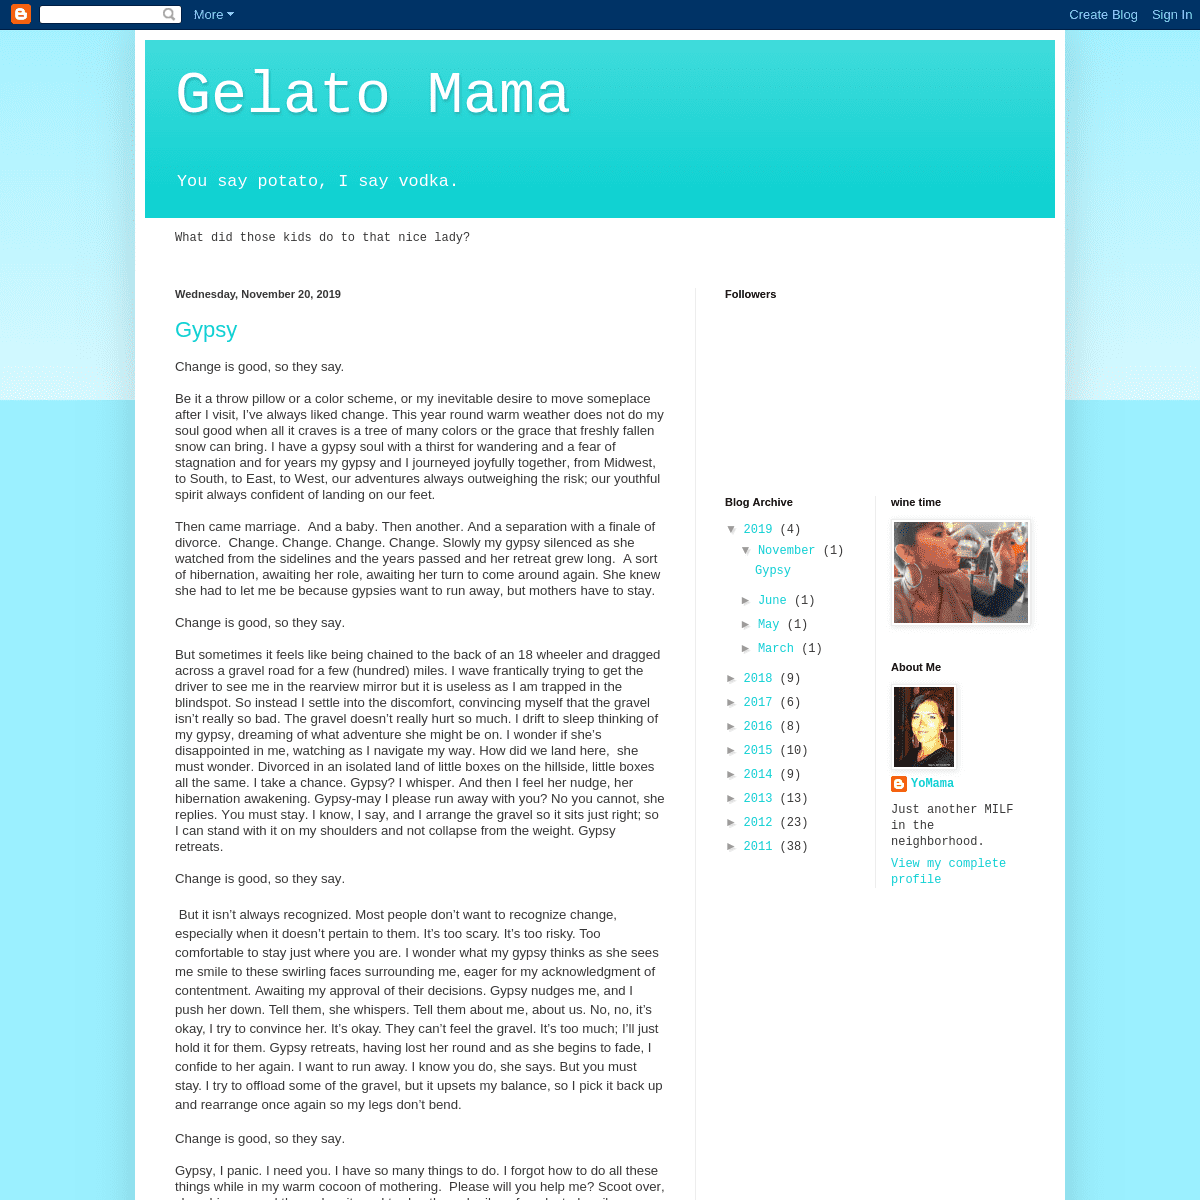 A complete backup of gelatomama.blogspot.com